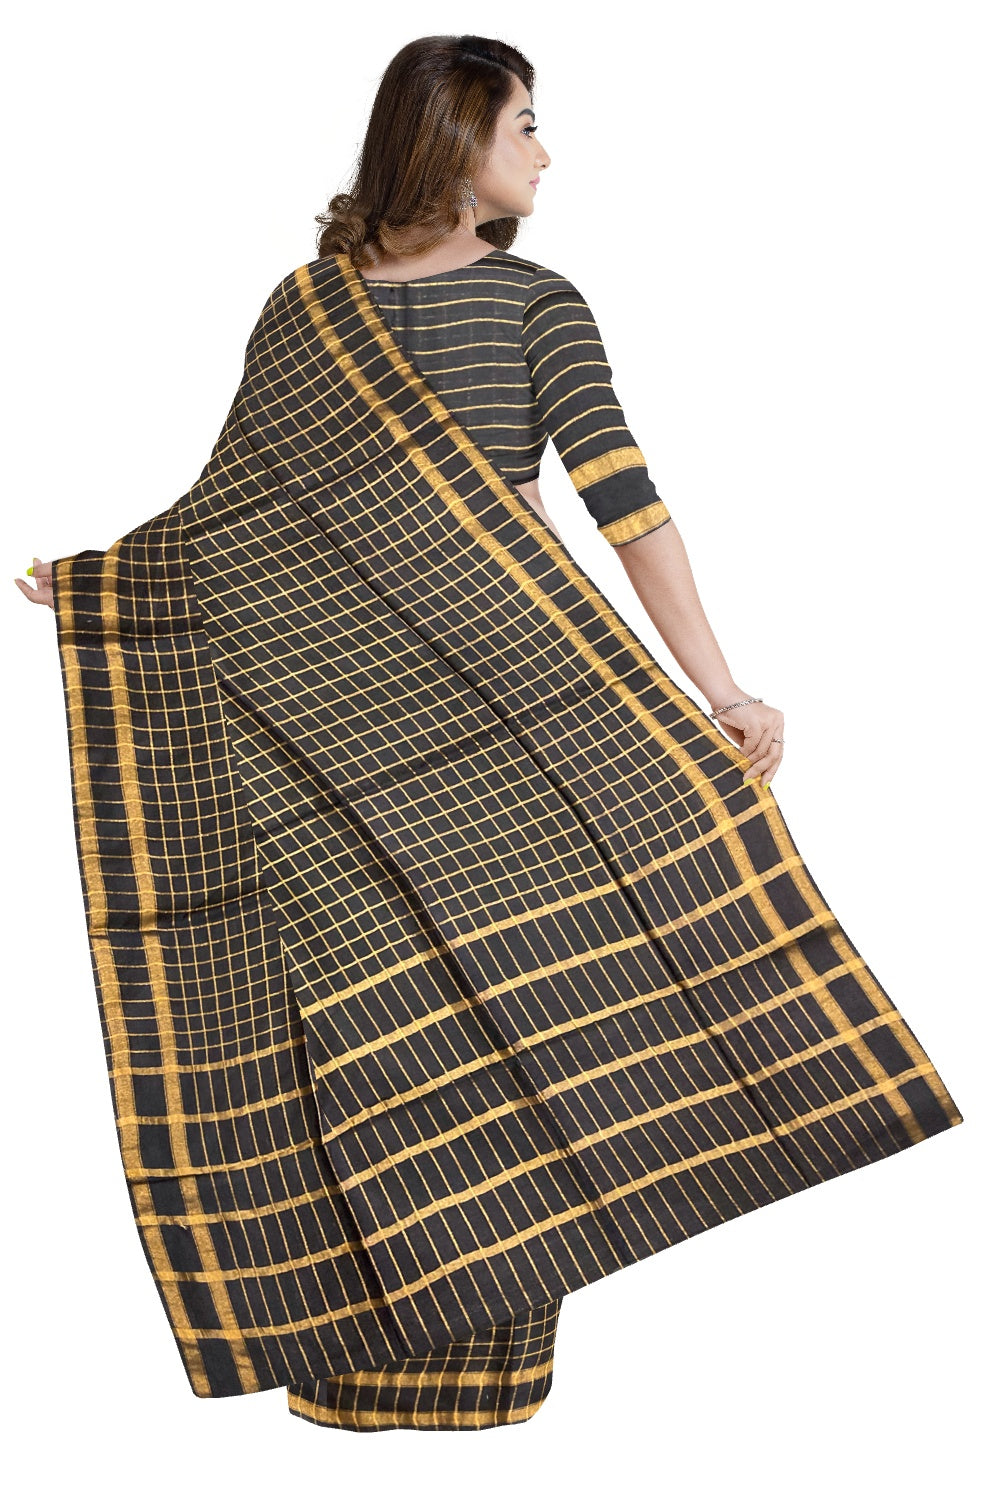 Southloom Cotton Kasavu Designer Checks in Black Saree